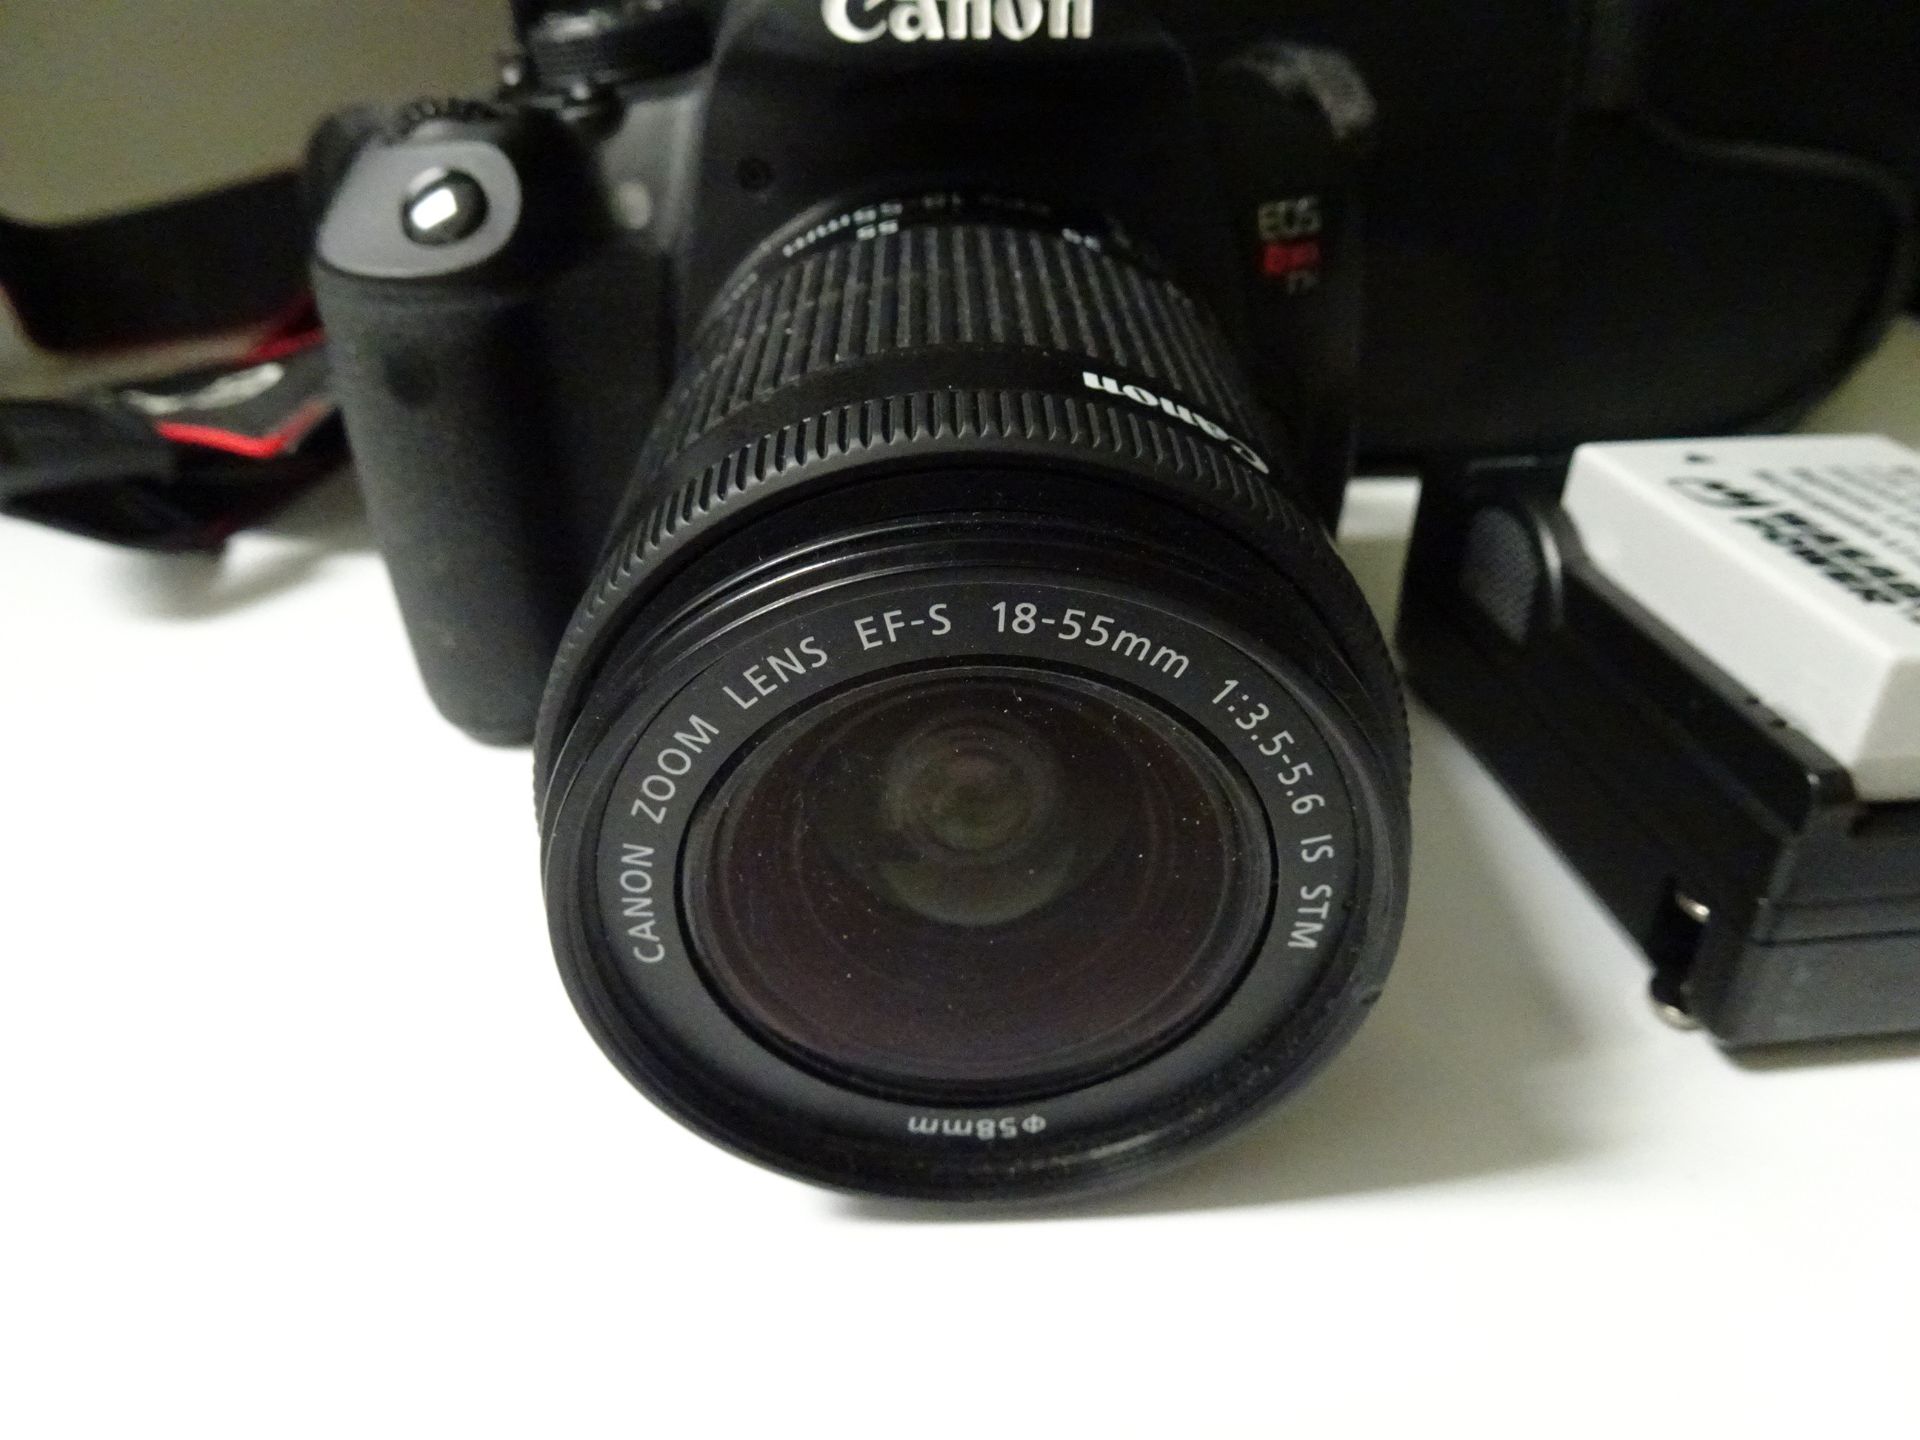 Canon EOS Rebel T5i DSLR sn 302075003371 w/ Canon EF-S 18-55mm 1:3.5-5.6 IS STM /58mm Lens, (2) - Image 2 of 15